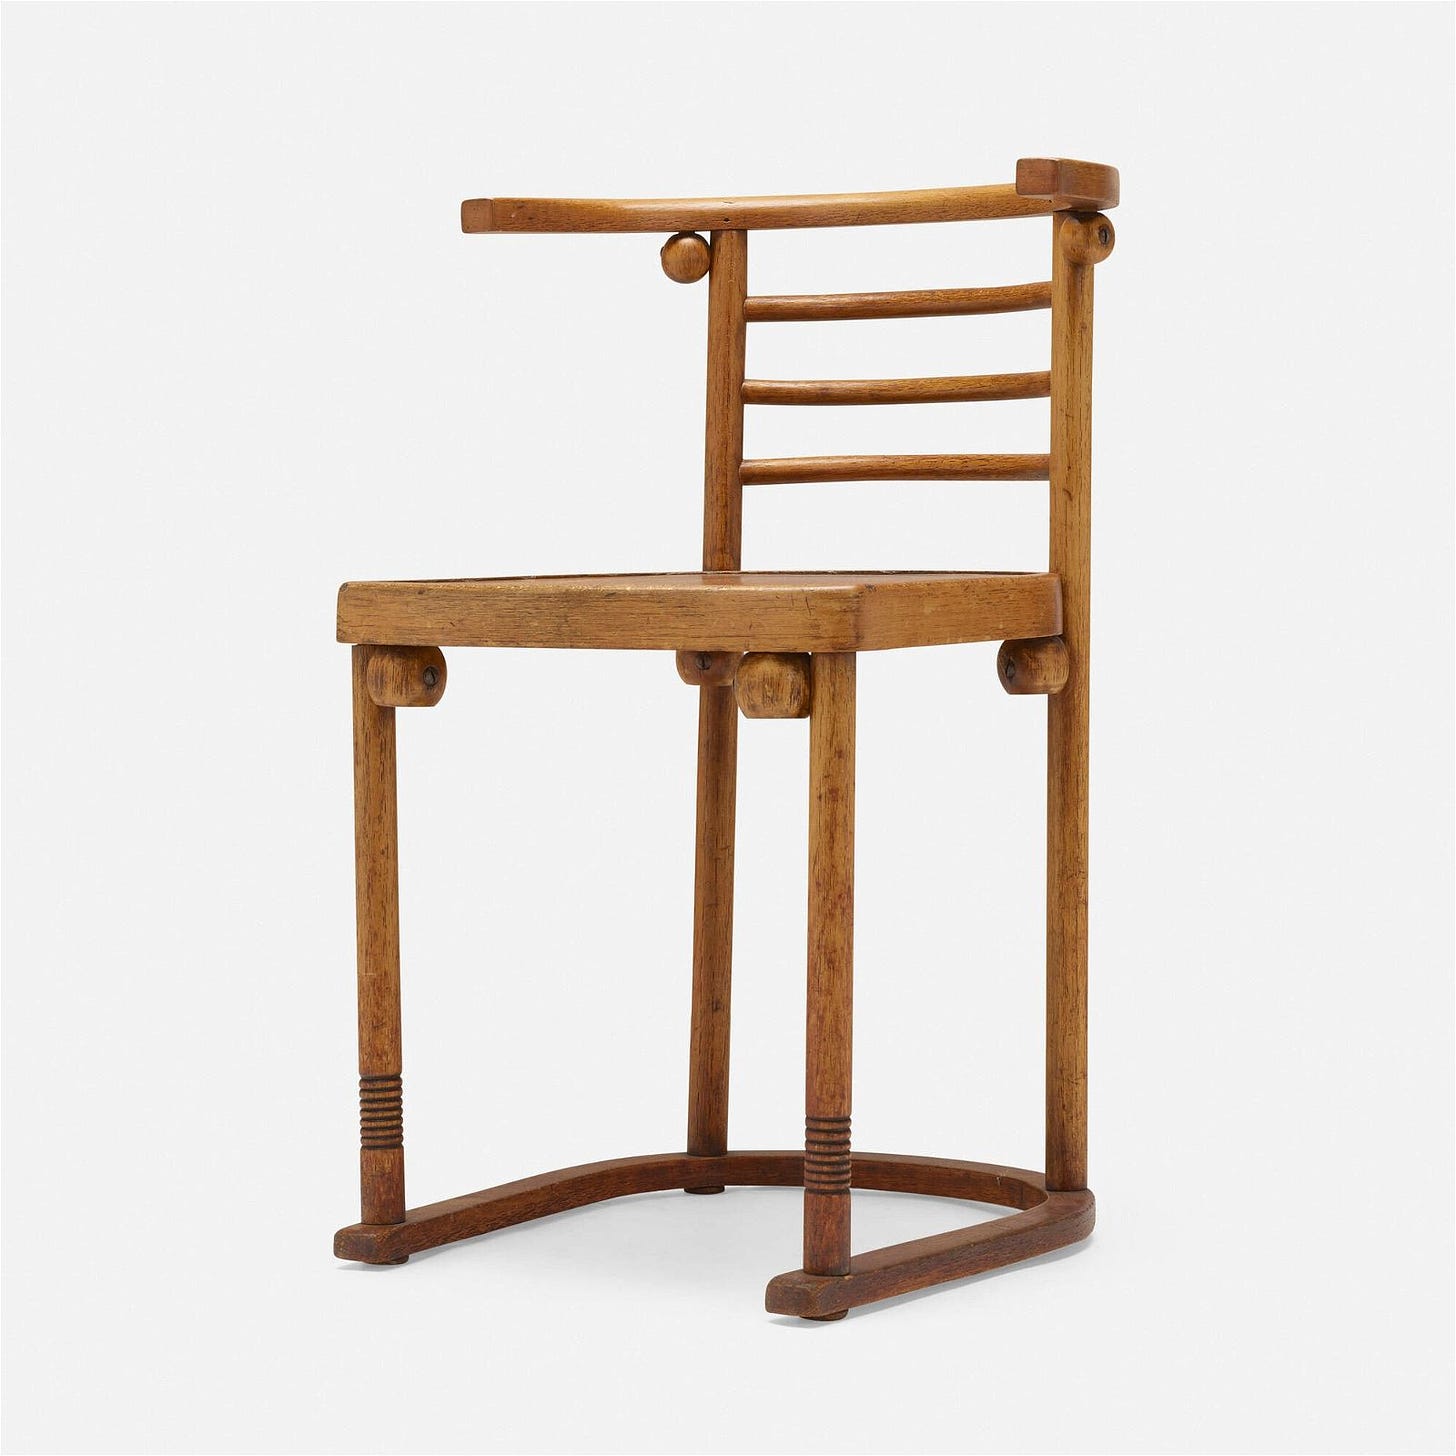 Josef Hoffmann, Fledermaus chair, model 728